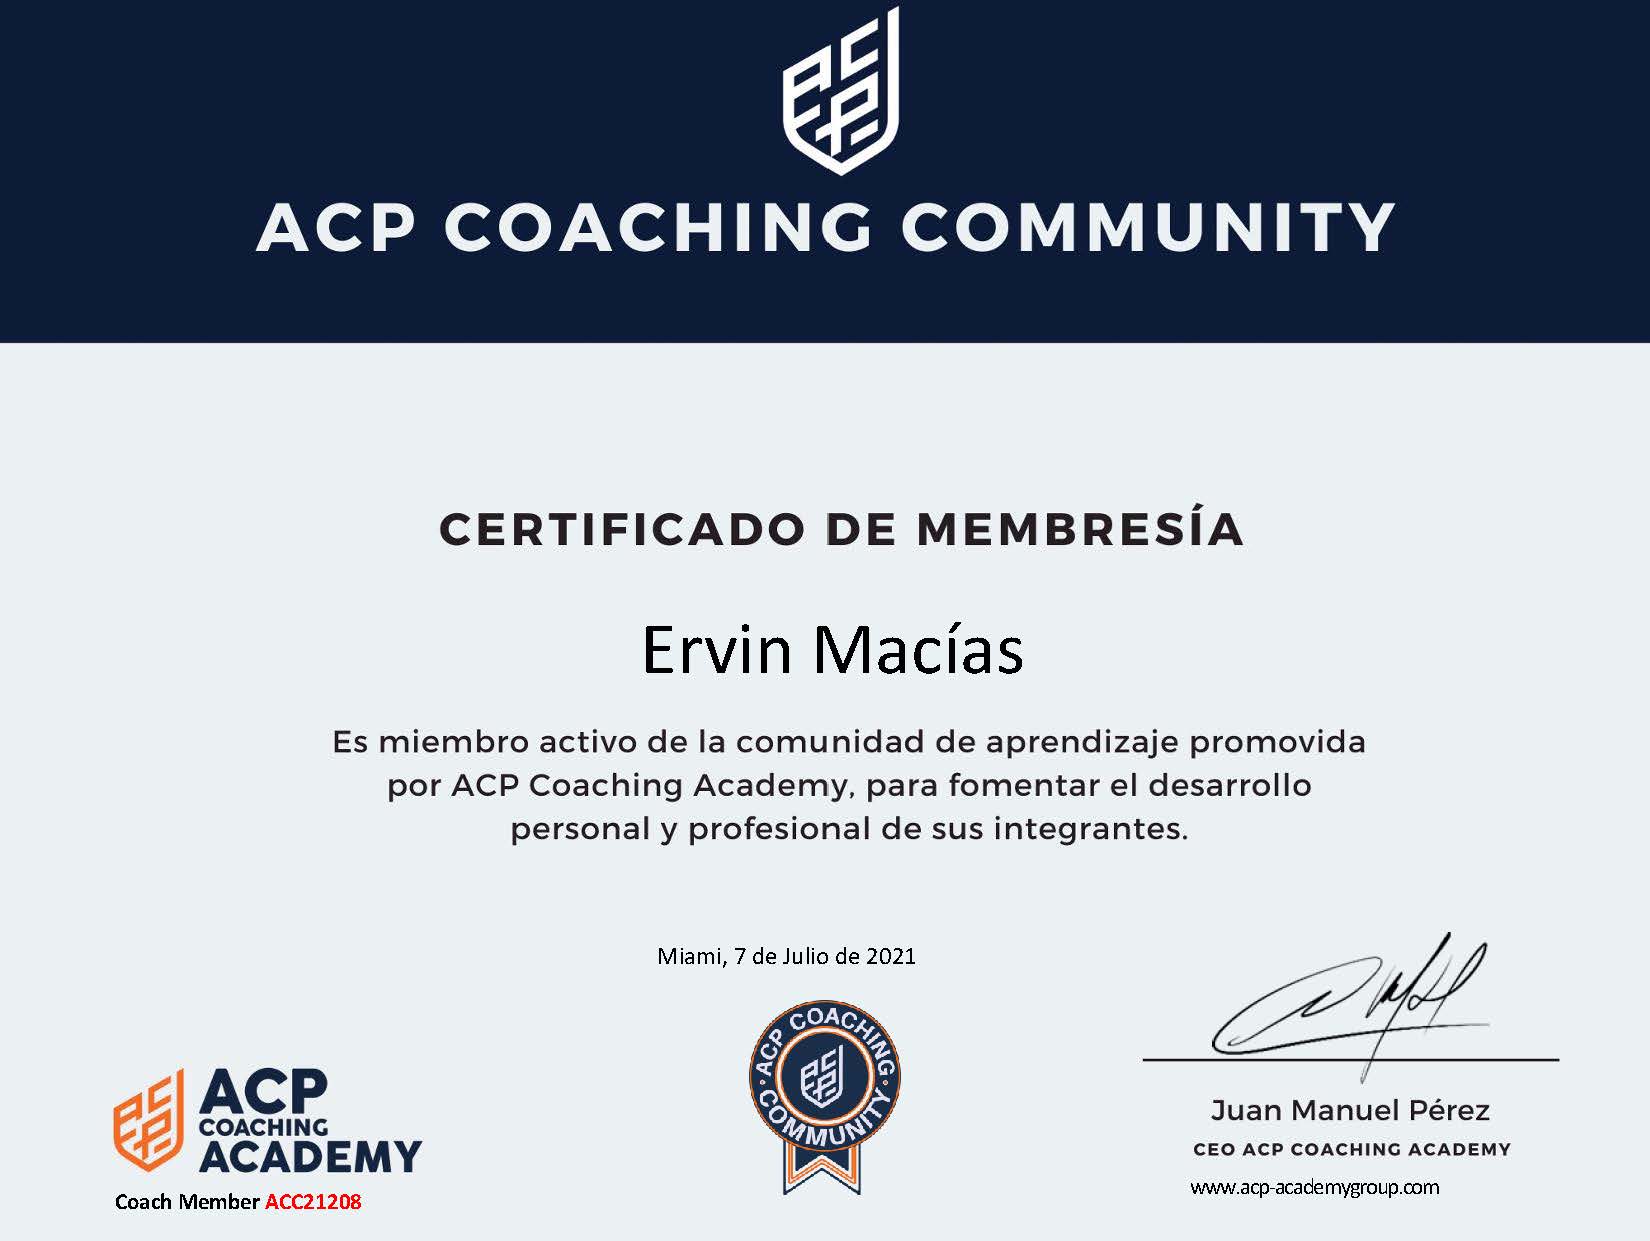 ACP Coaching Community